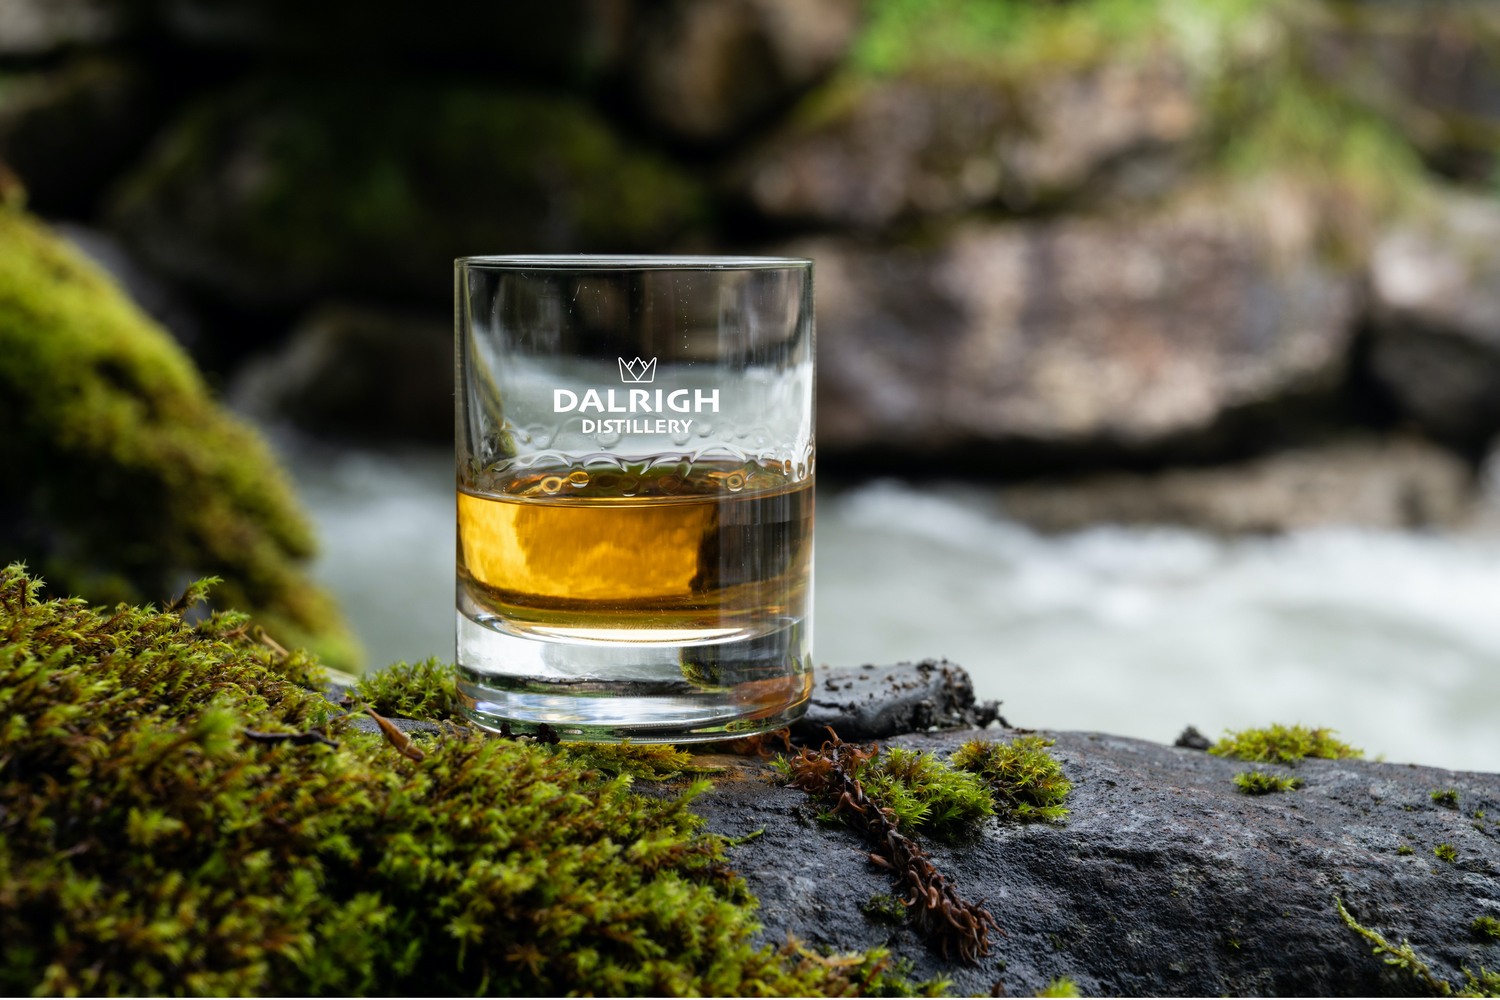 Loch Lomond whisky